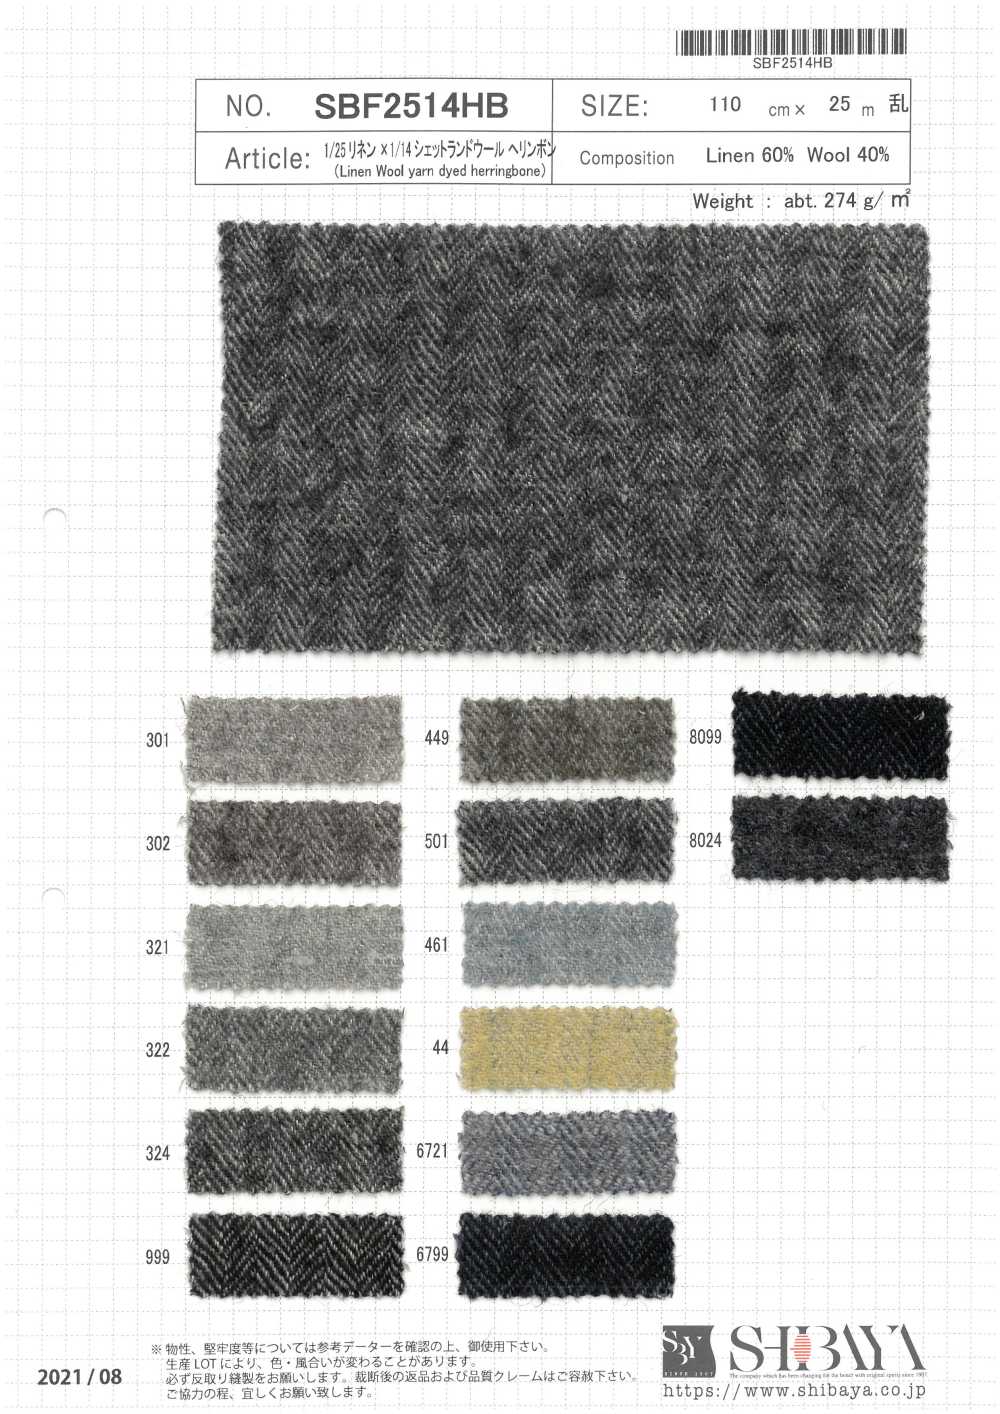 SBF2514HB 1/25 Linen X 1/14 Shetland Wool Herringbone[Textile / Fabric] SHIBAYA